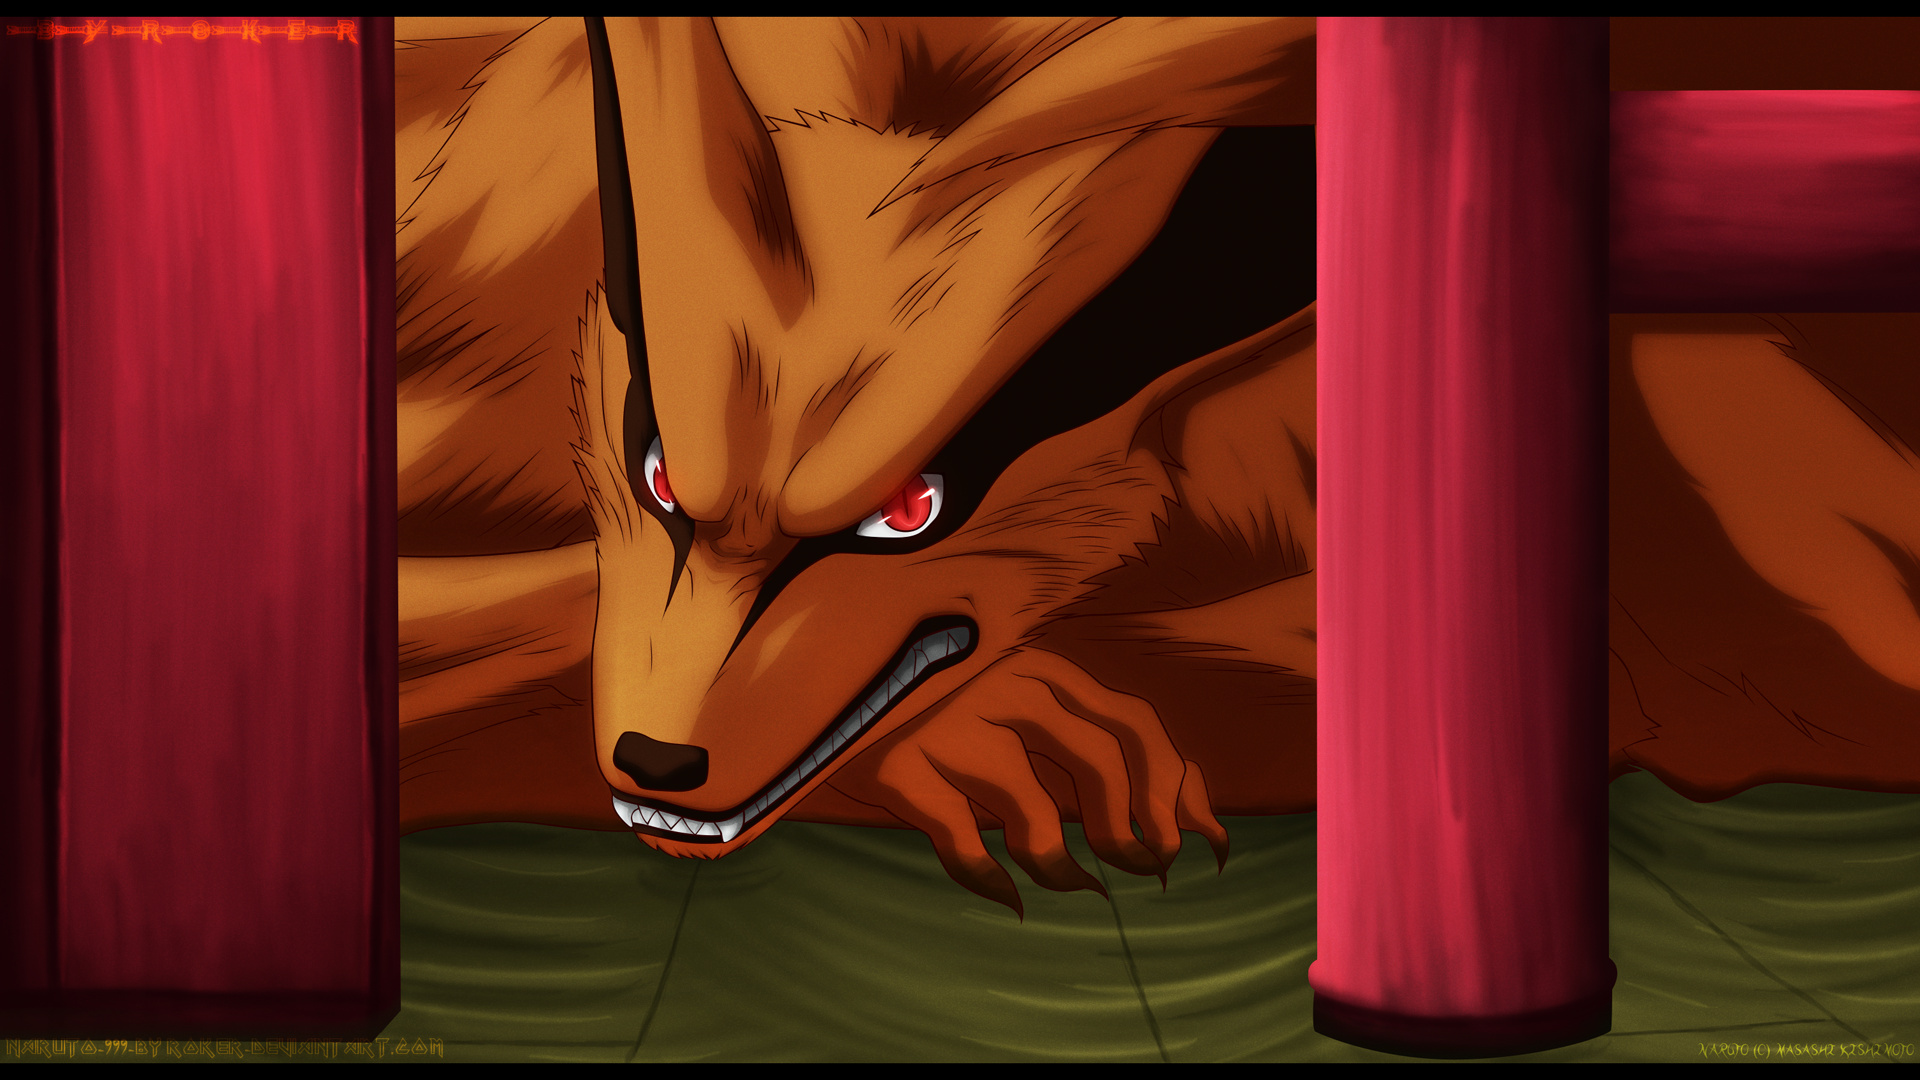 9 Tailed Fox, Mythical creature, Anime wallpaper, Hidden power, 1920x1080 Full HD Desktop